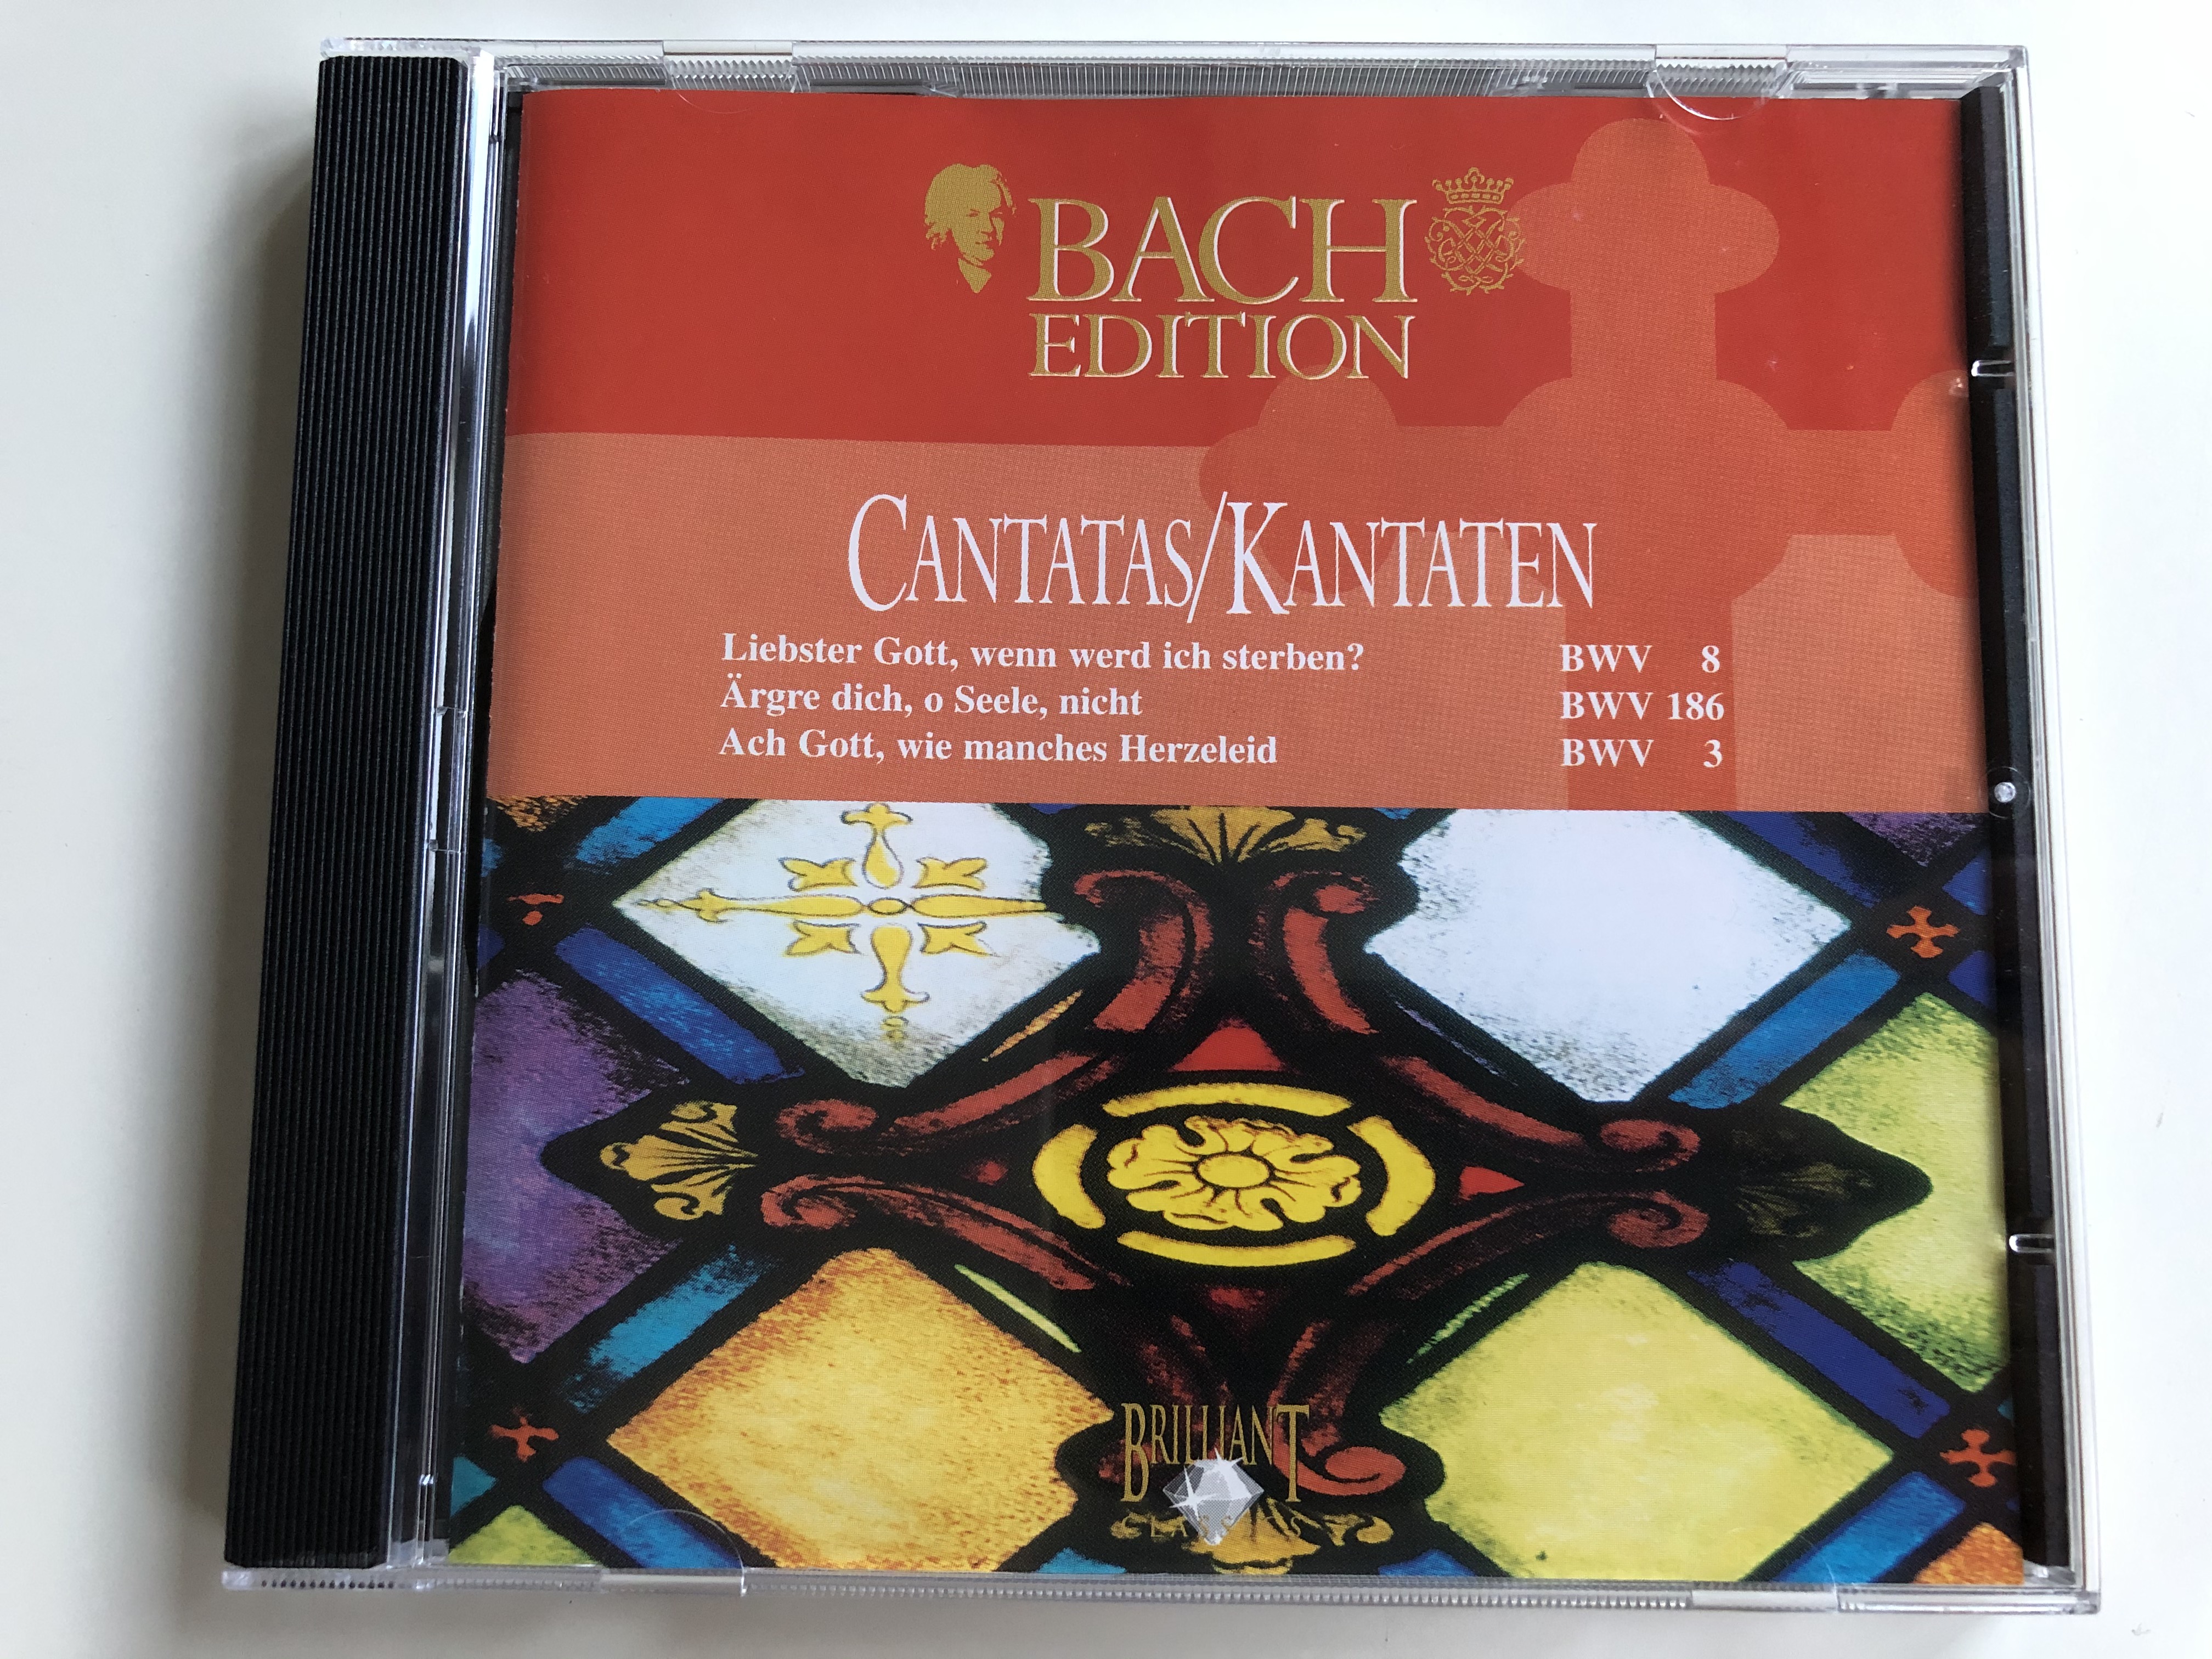 bach-edition-cantatas-kantaten-liebster-gott-wenn-werd-ich-sterben-bwv-8-rgre-dich-o-seele-nicht-bwv-186-ach-gott-wie-manches-herzeleid-bwv-3-brilliant-classics-audio-cd-993715-1-.jpg